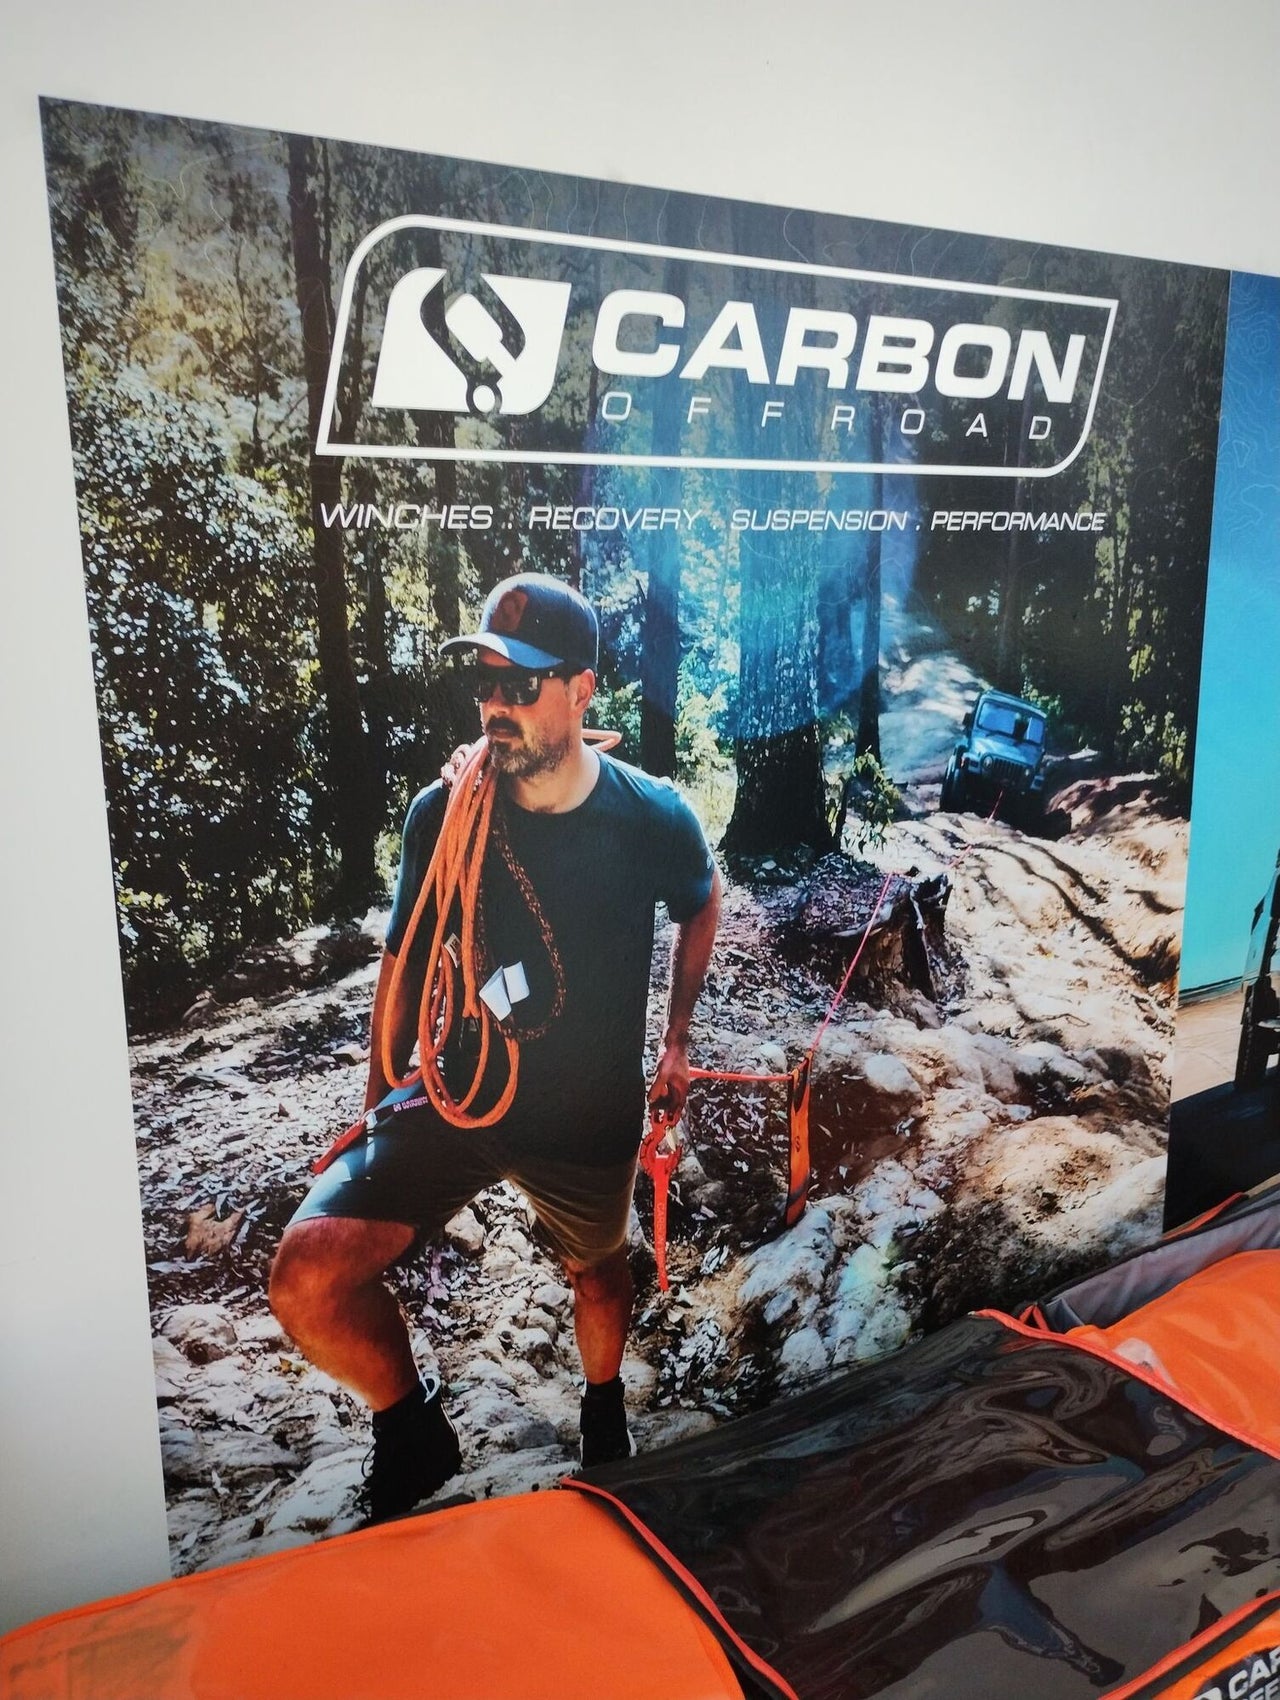 Carbon Offroad Vinyl Wall Banner Sticker 1200 x 1200mm BUSH - CW-VS-12-BU 2